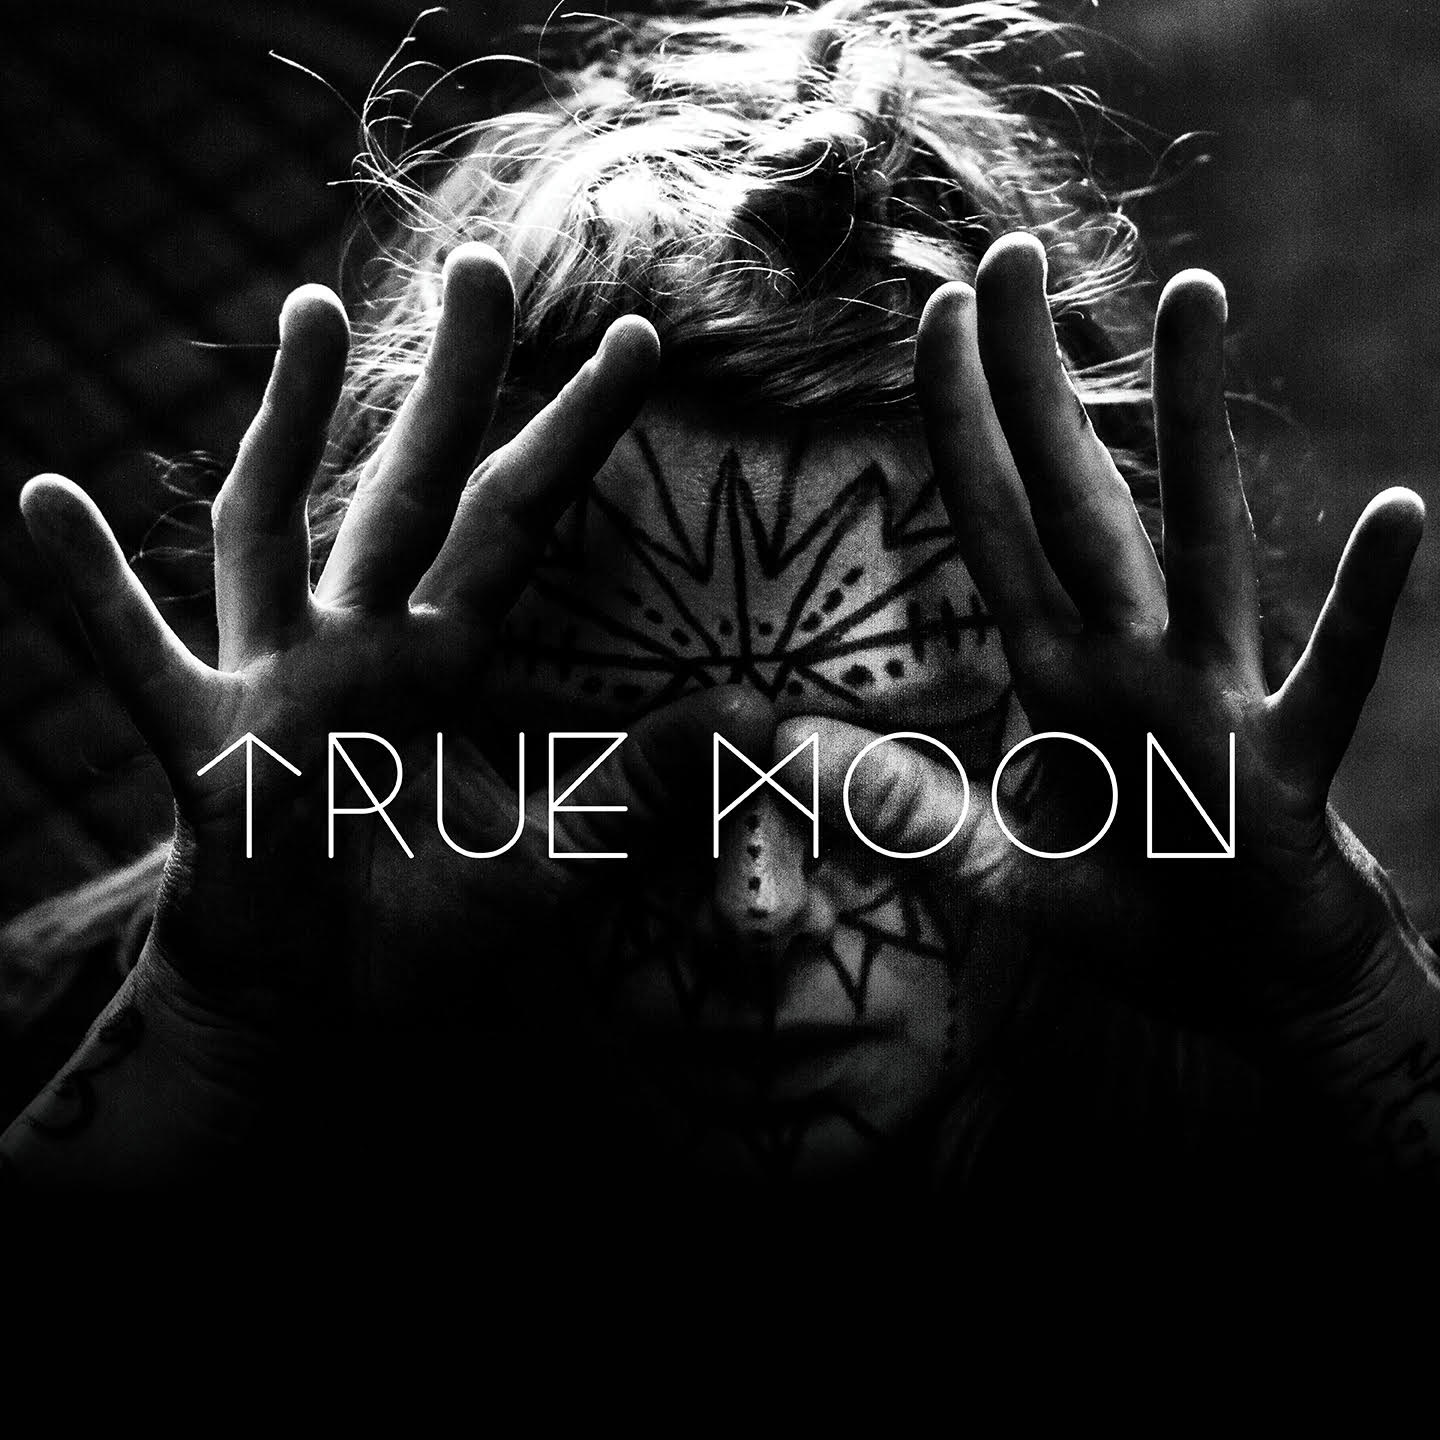 True Moon – “Sugar”